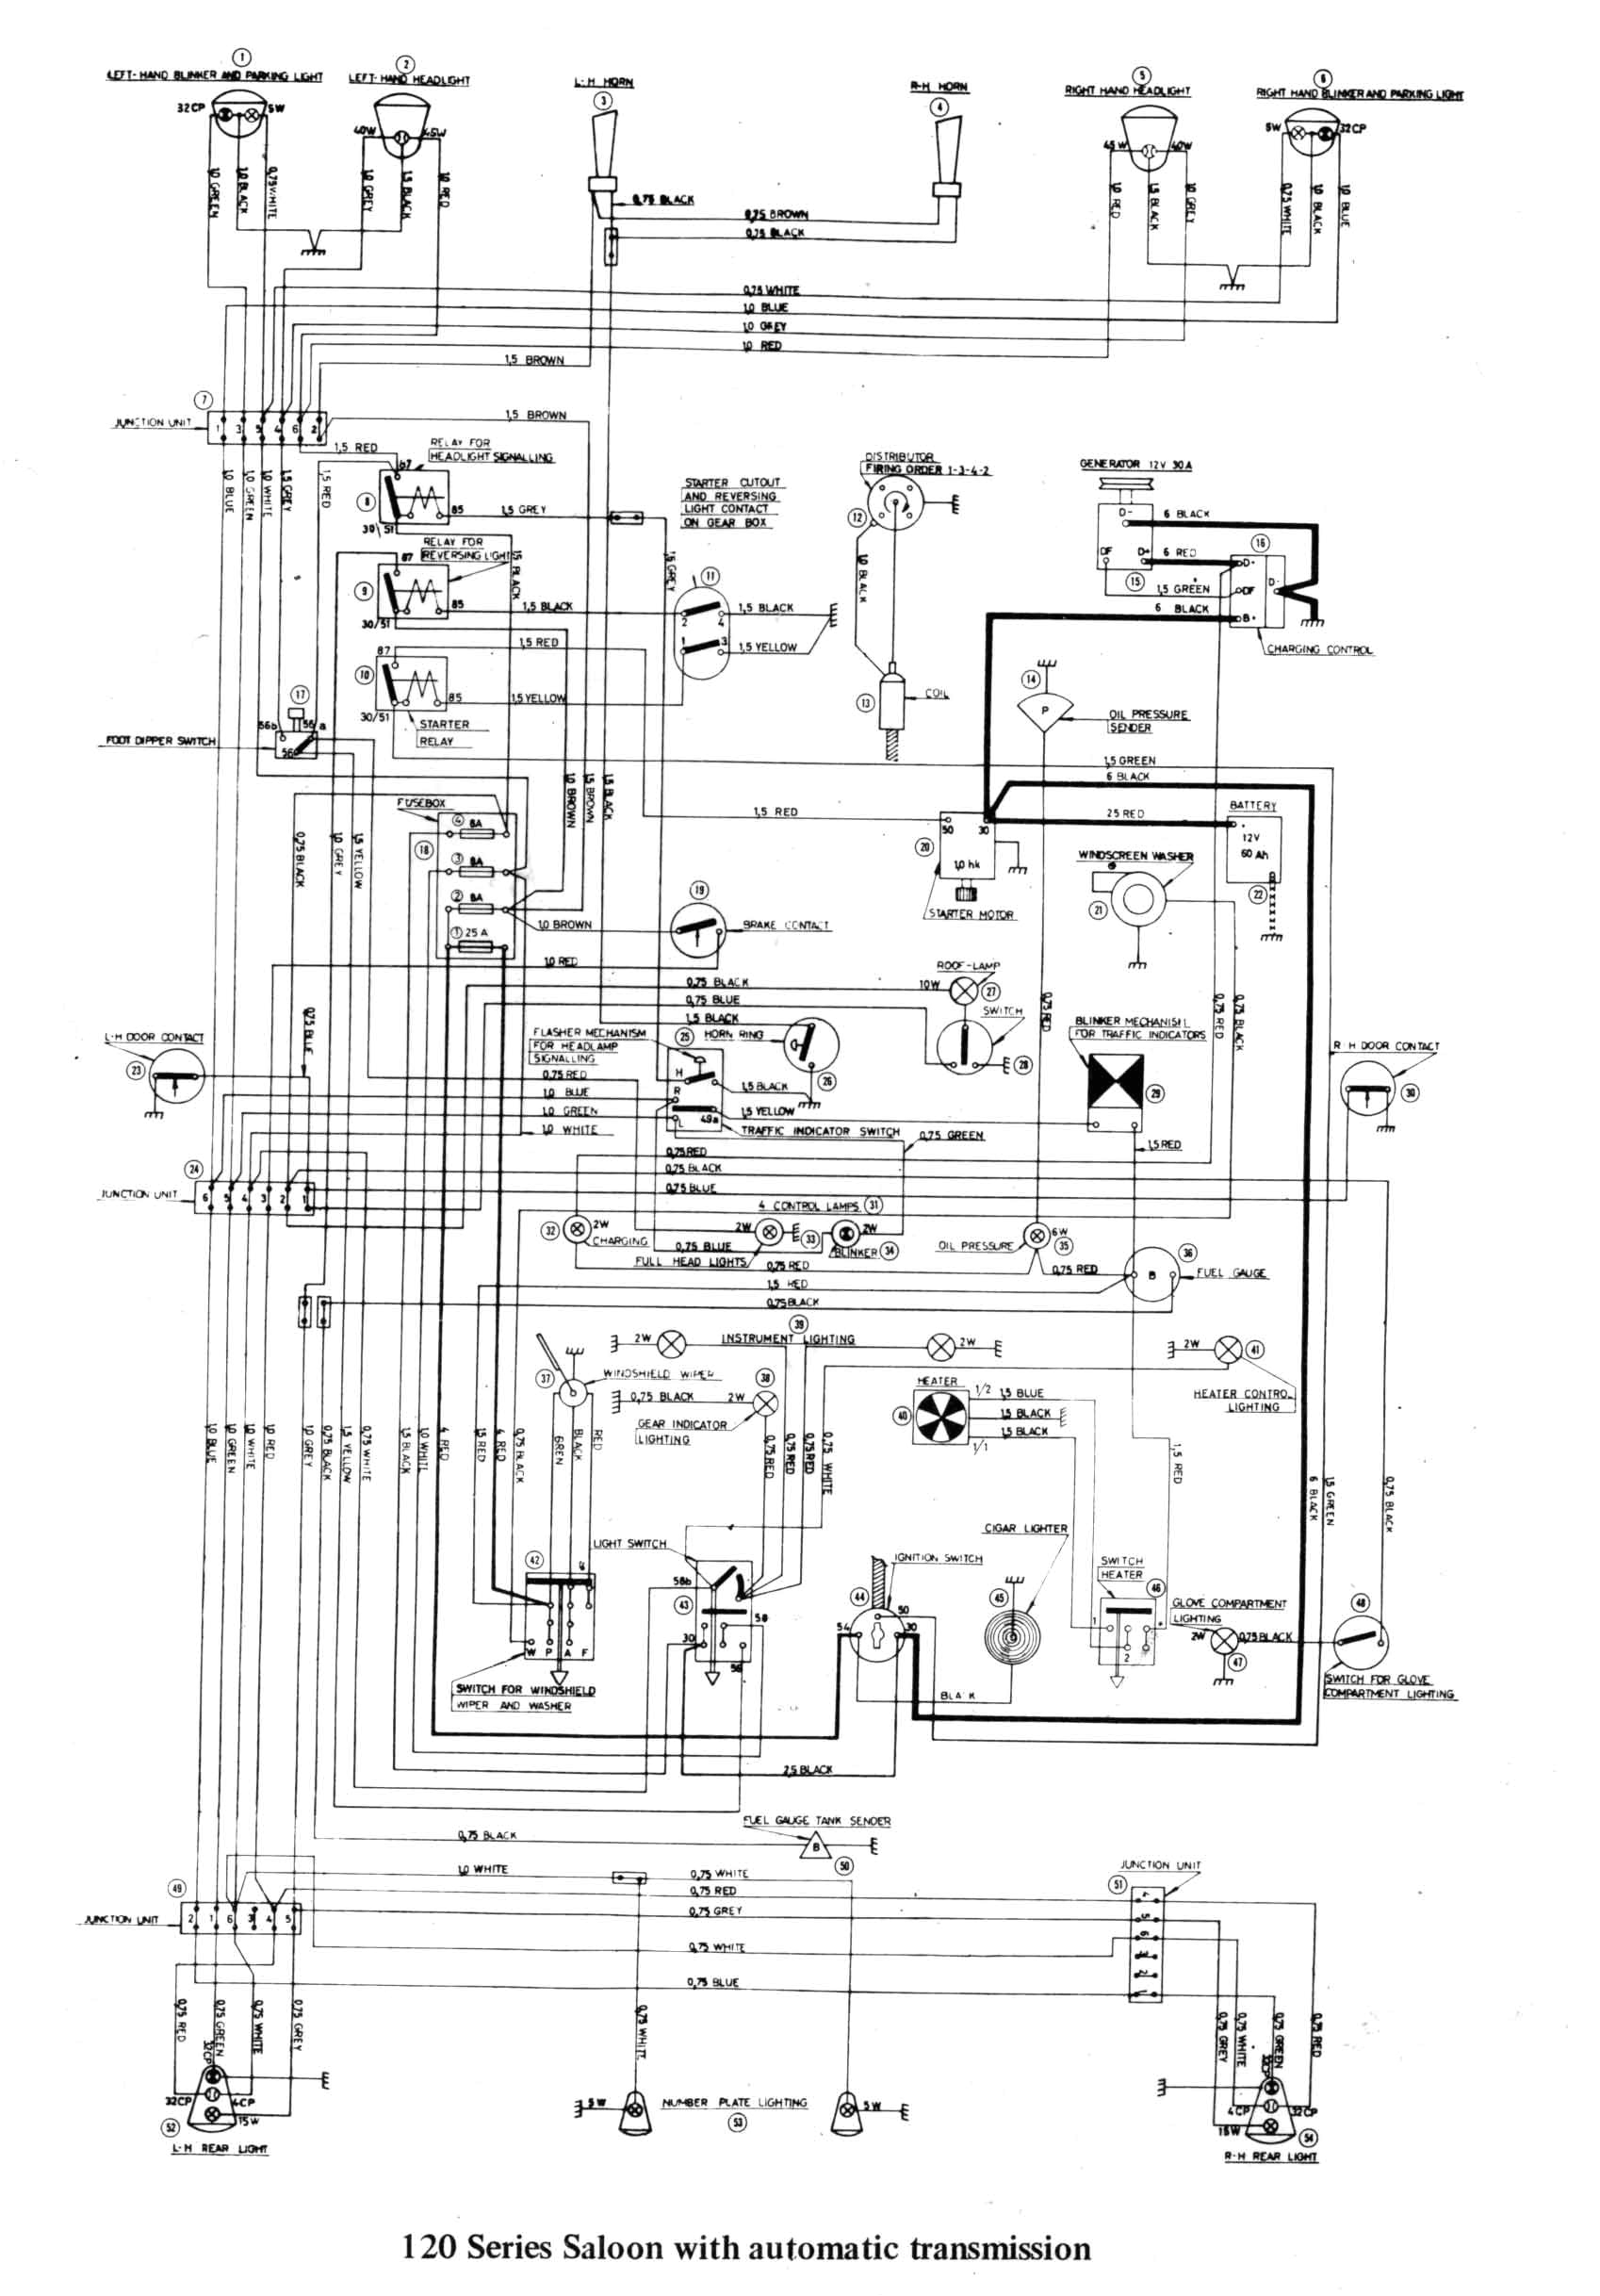 volvo b58 wiring diagram wiring diagram page volvo b58 wiring diagram